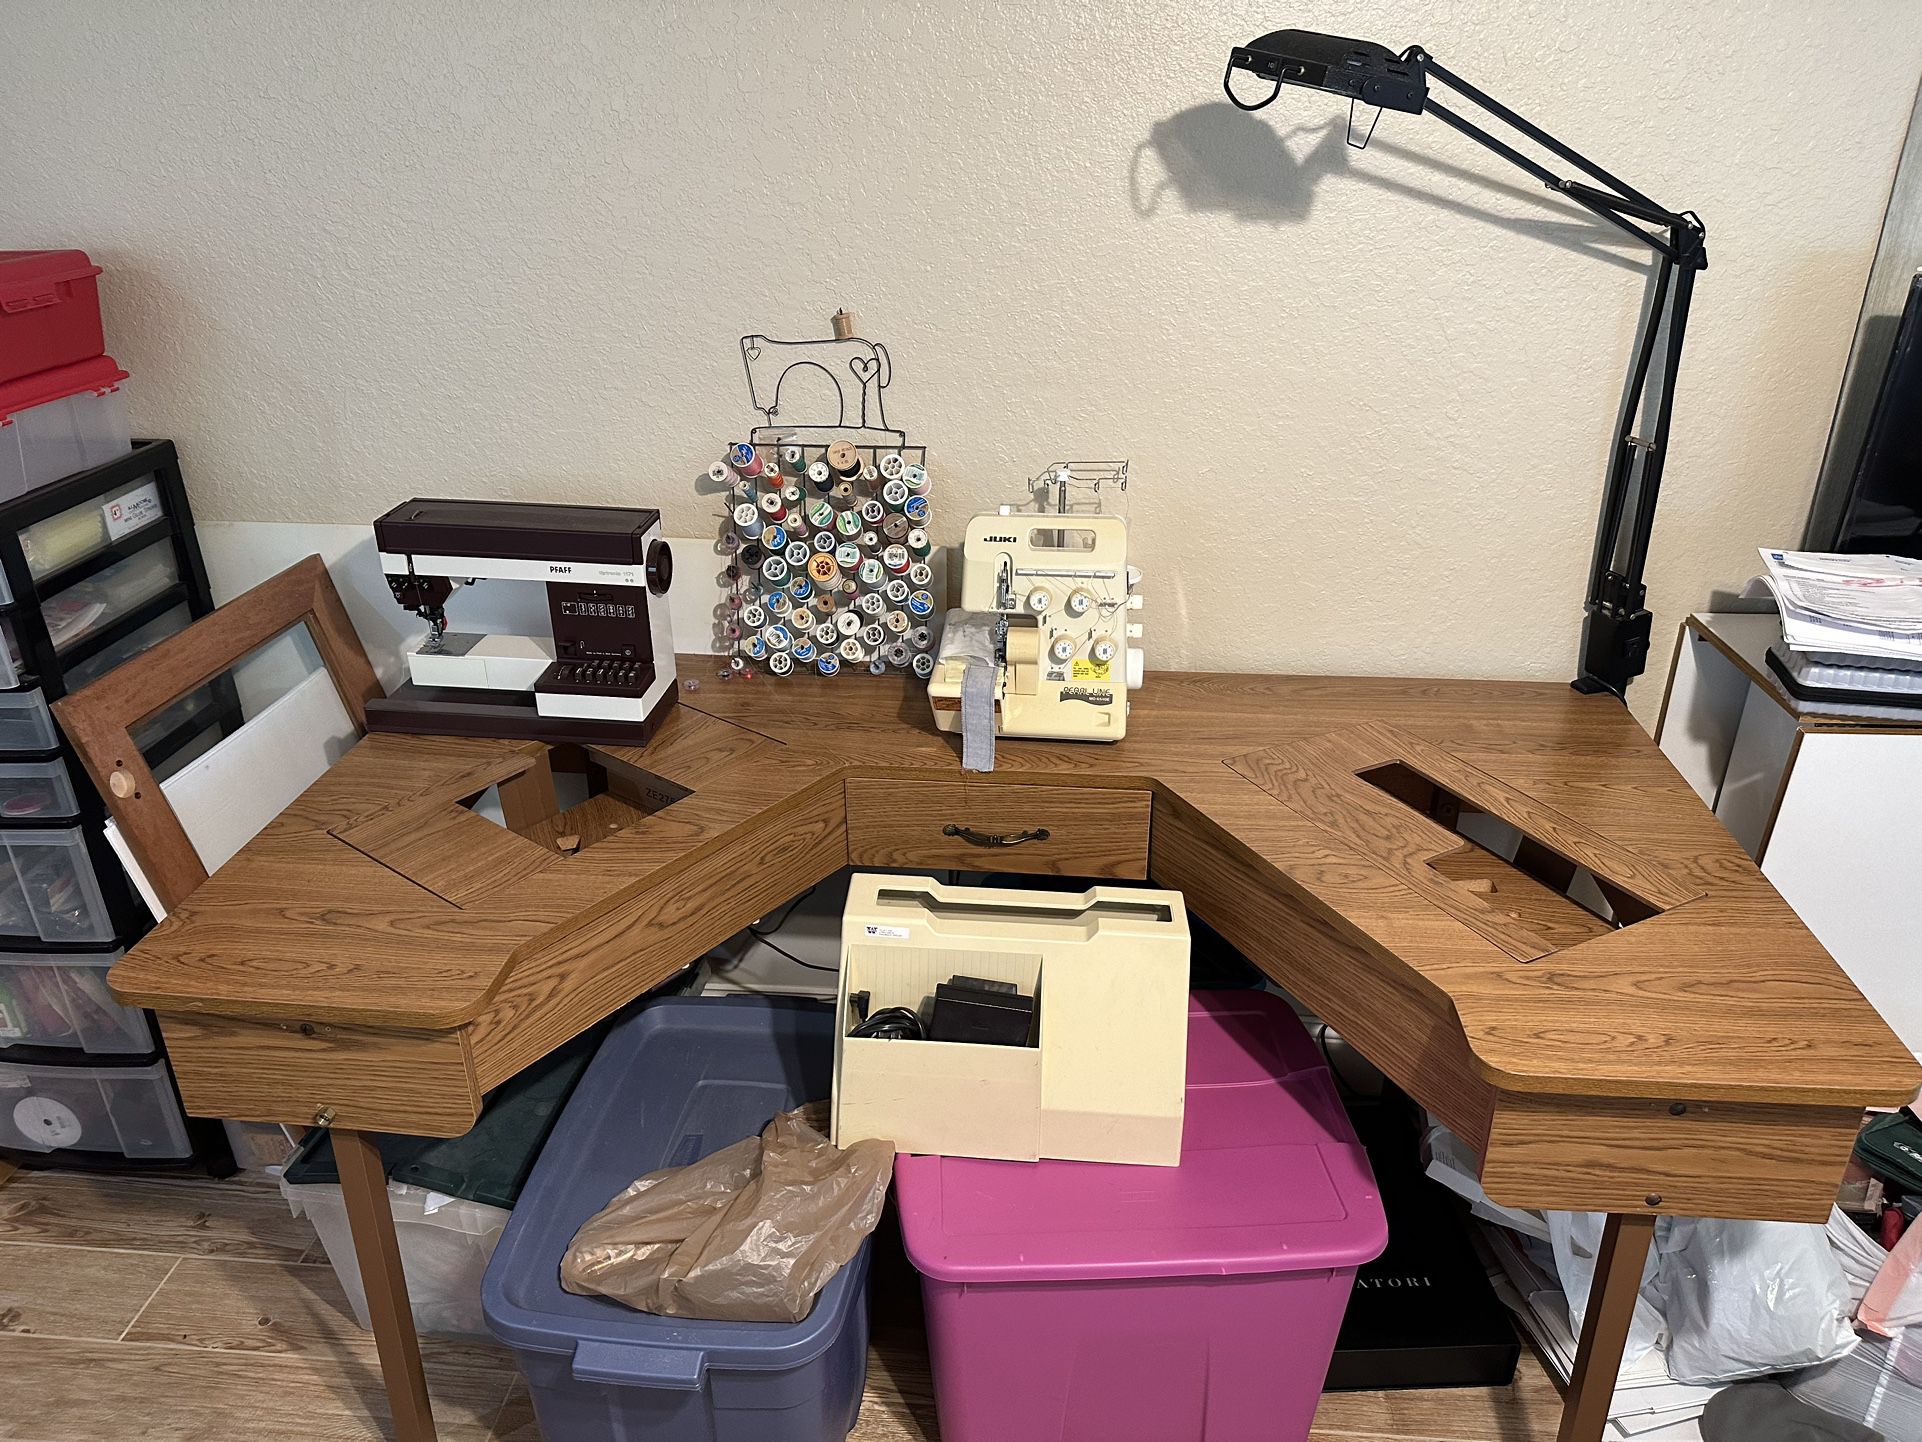 Pfaff Sewing Machine, Juki Serger, Table 